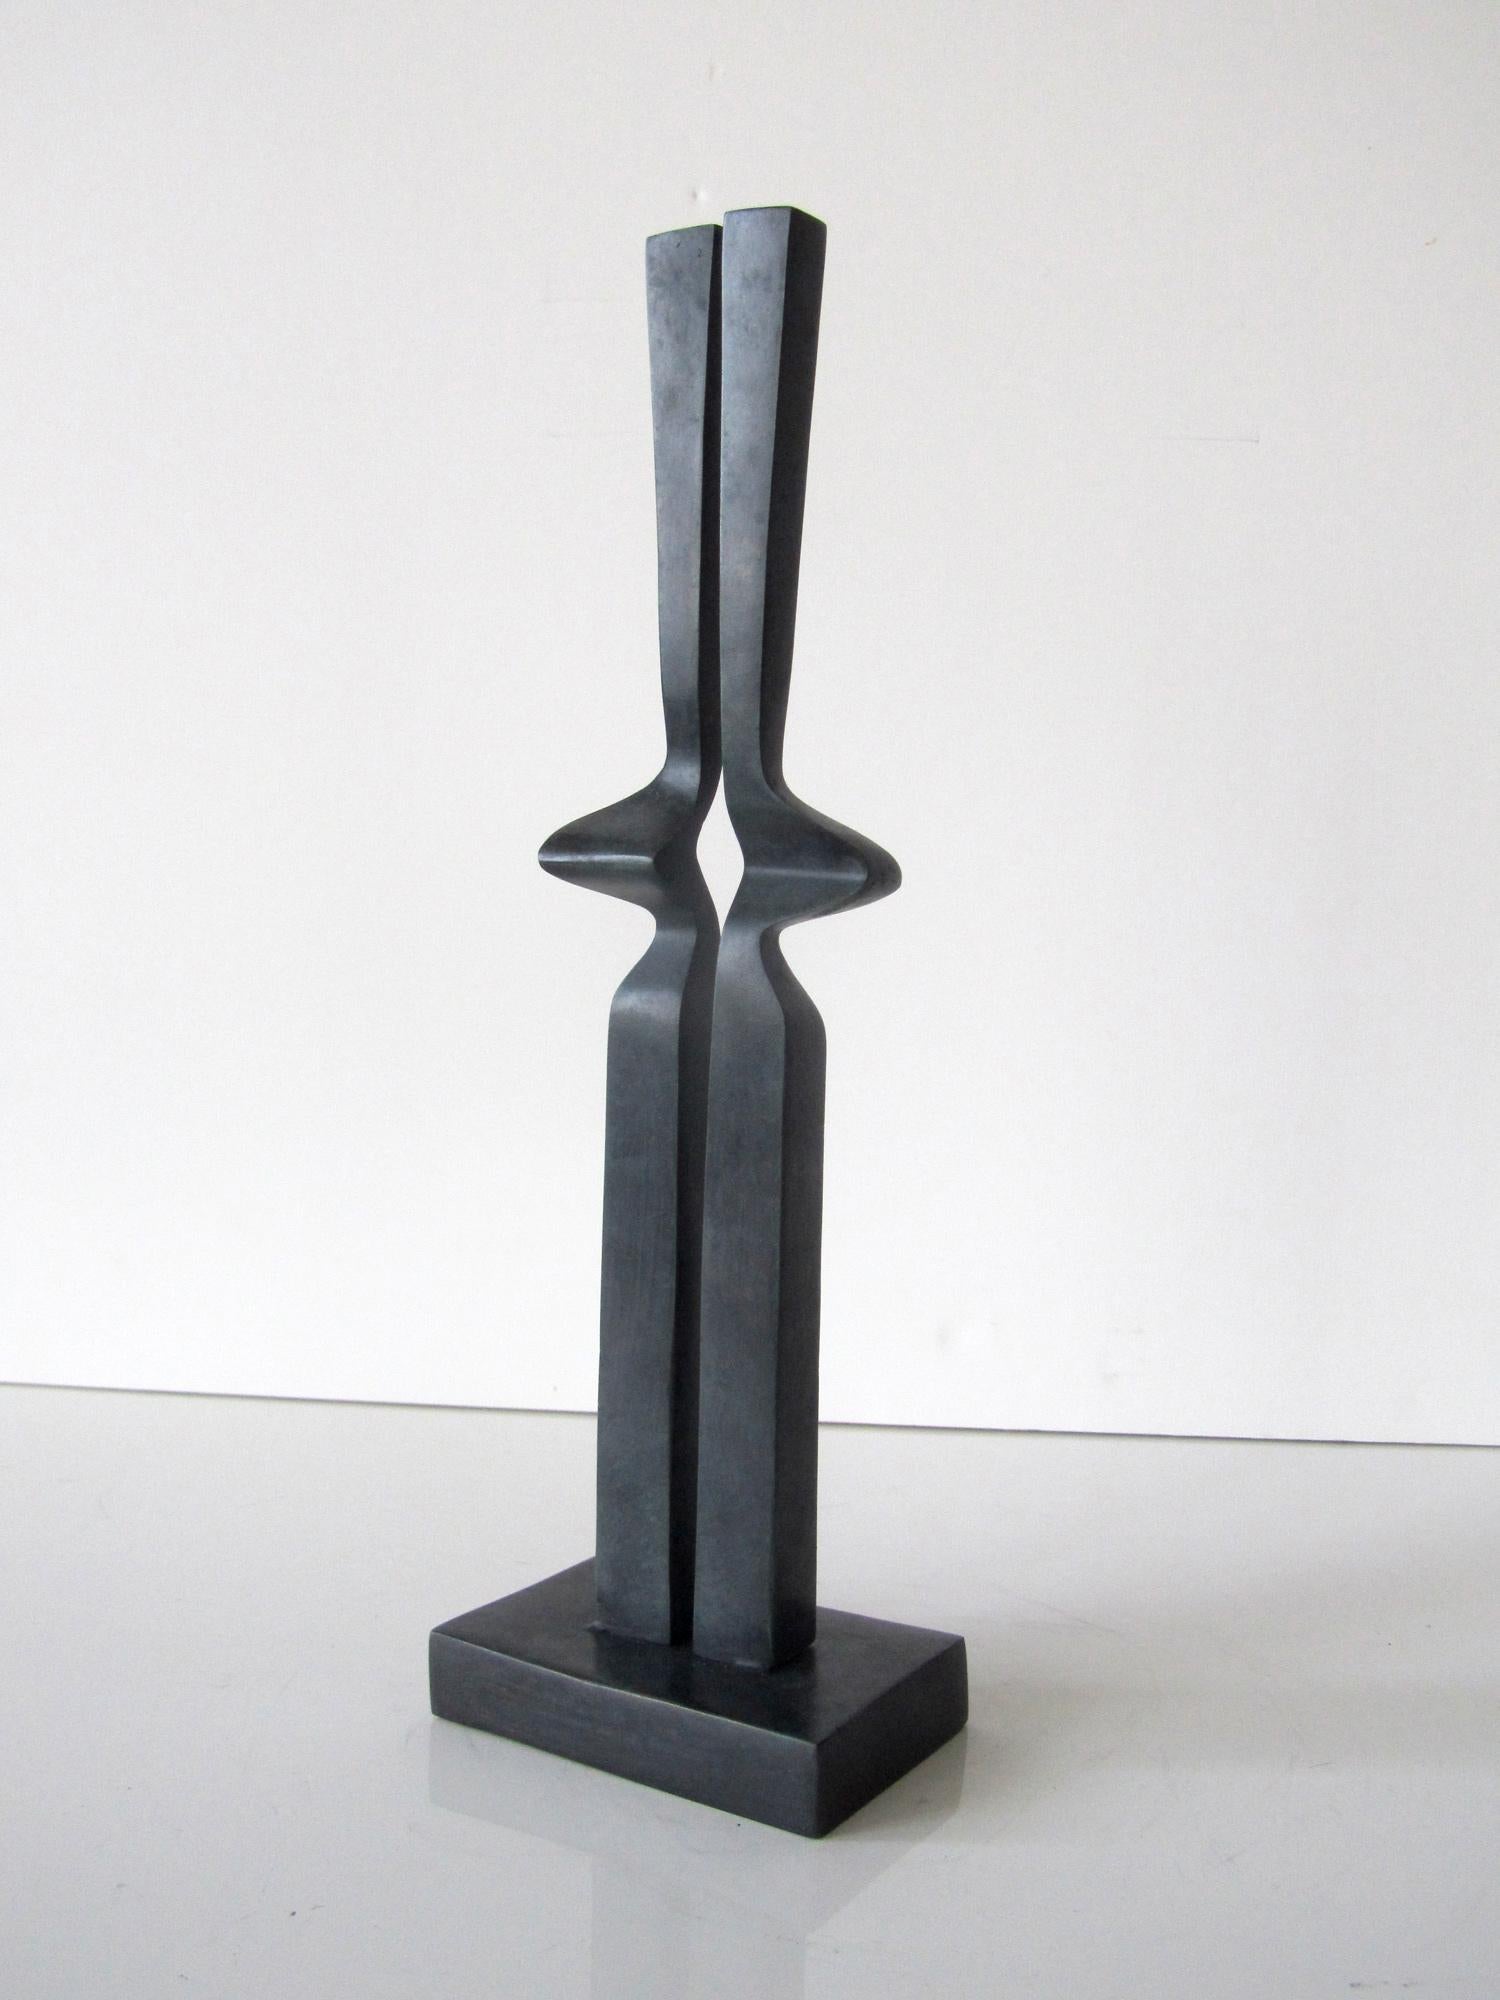 Hans Van de Bovenkamp Abstract Sculpture - "Itzamna Stella" small bronze sculpture 